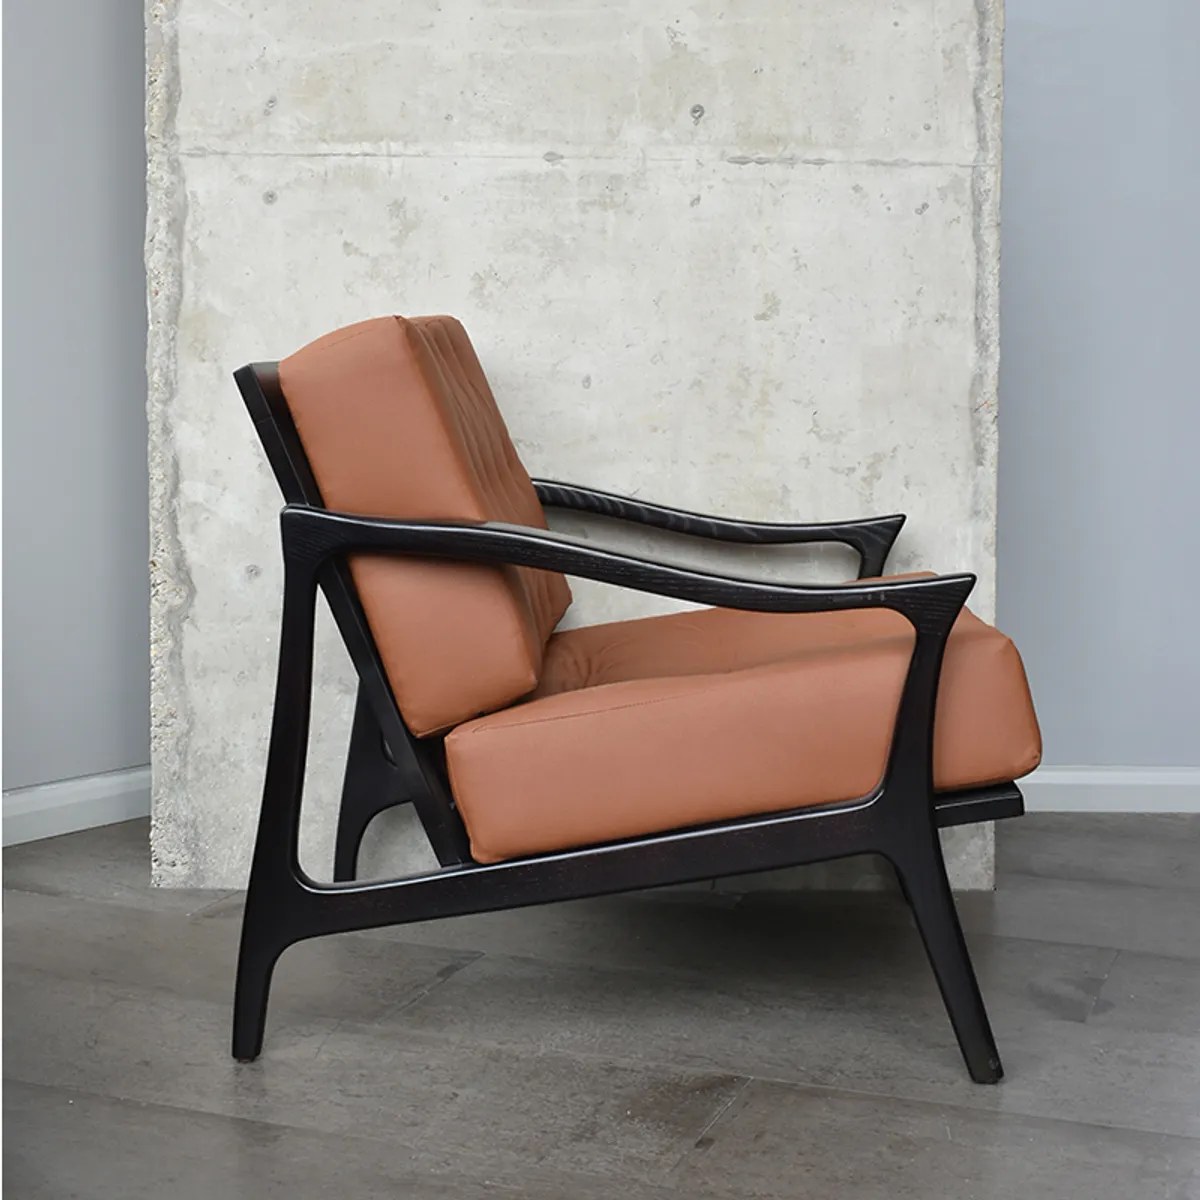 Paddy Lounge Chair 001 3